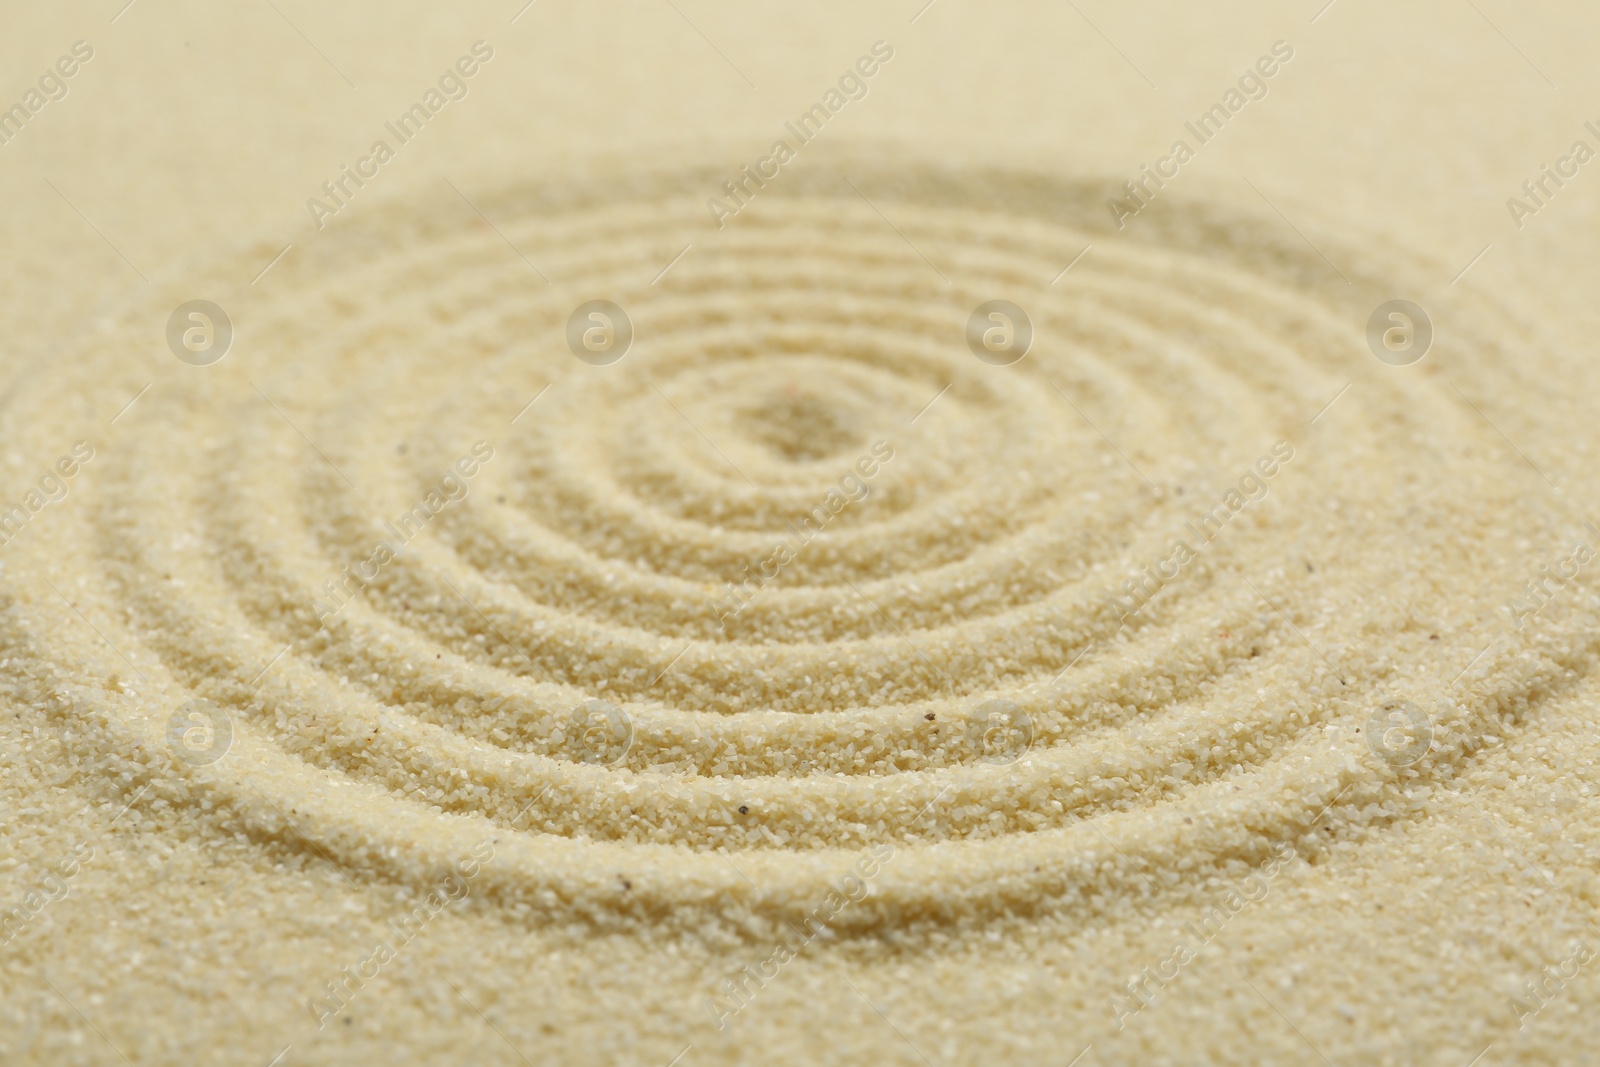 Photo of Zen rock garden. Circle pattern on beige sand, closeup